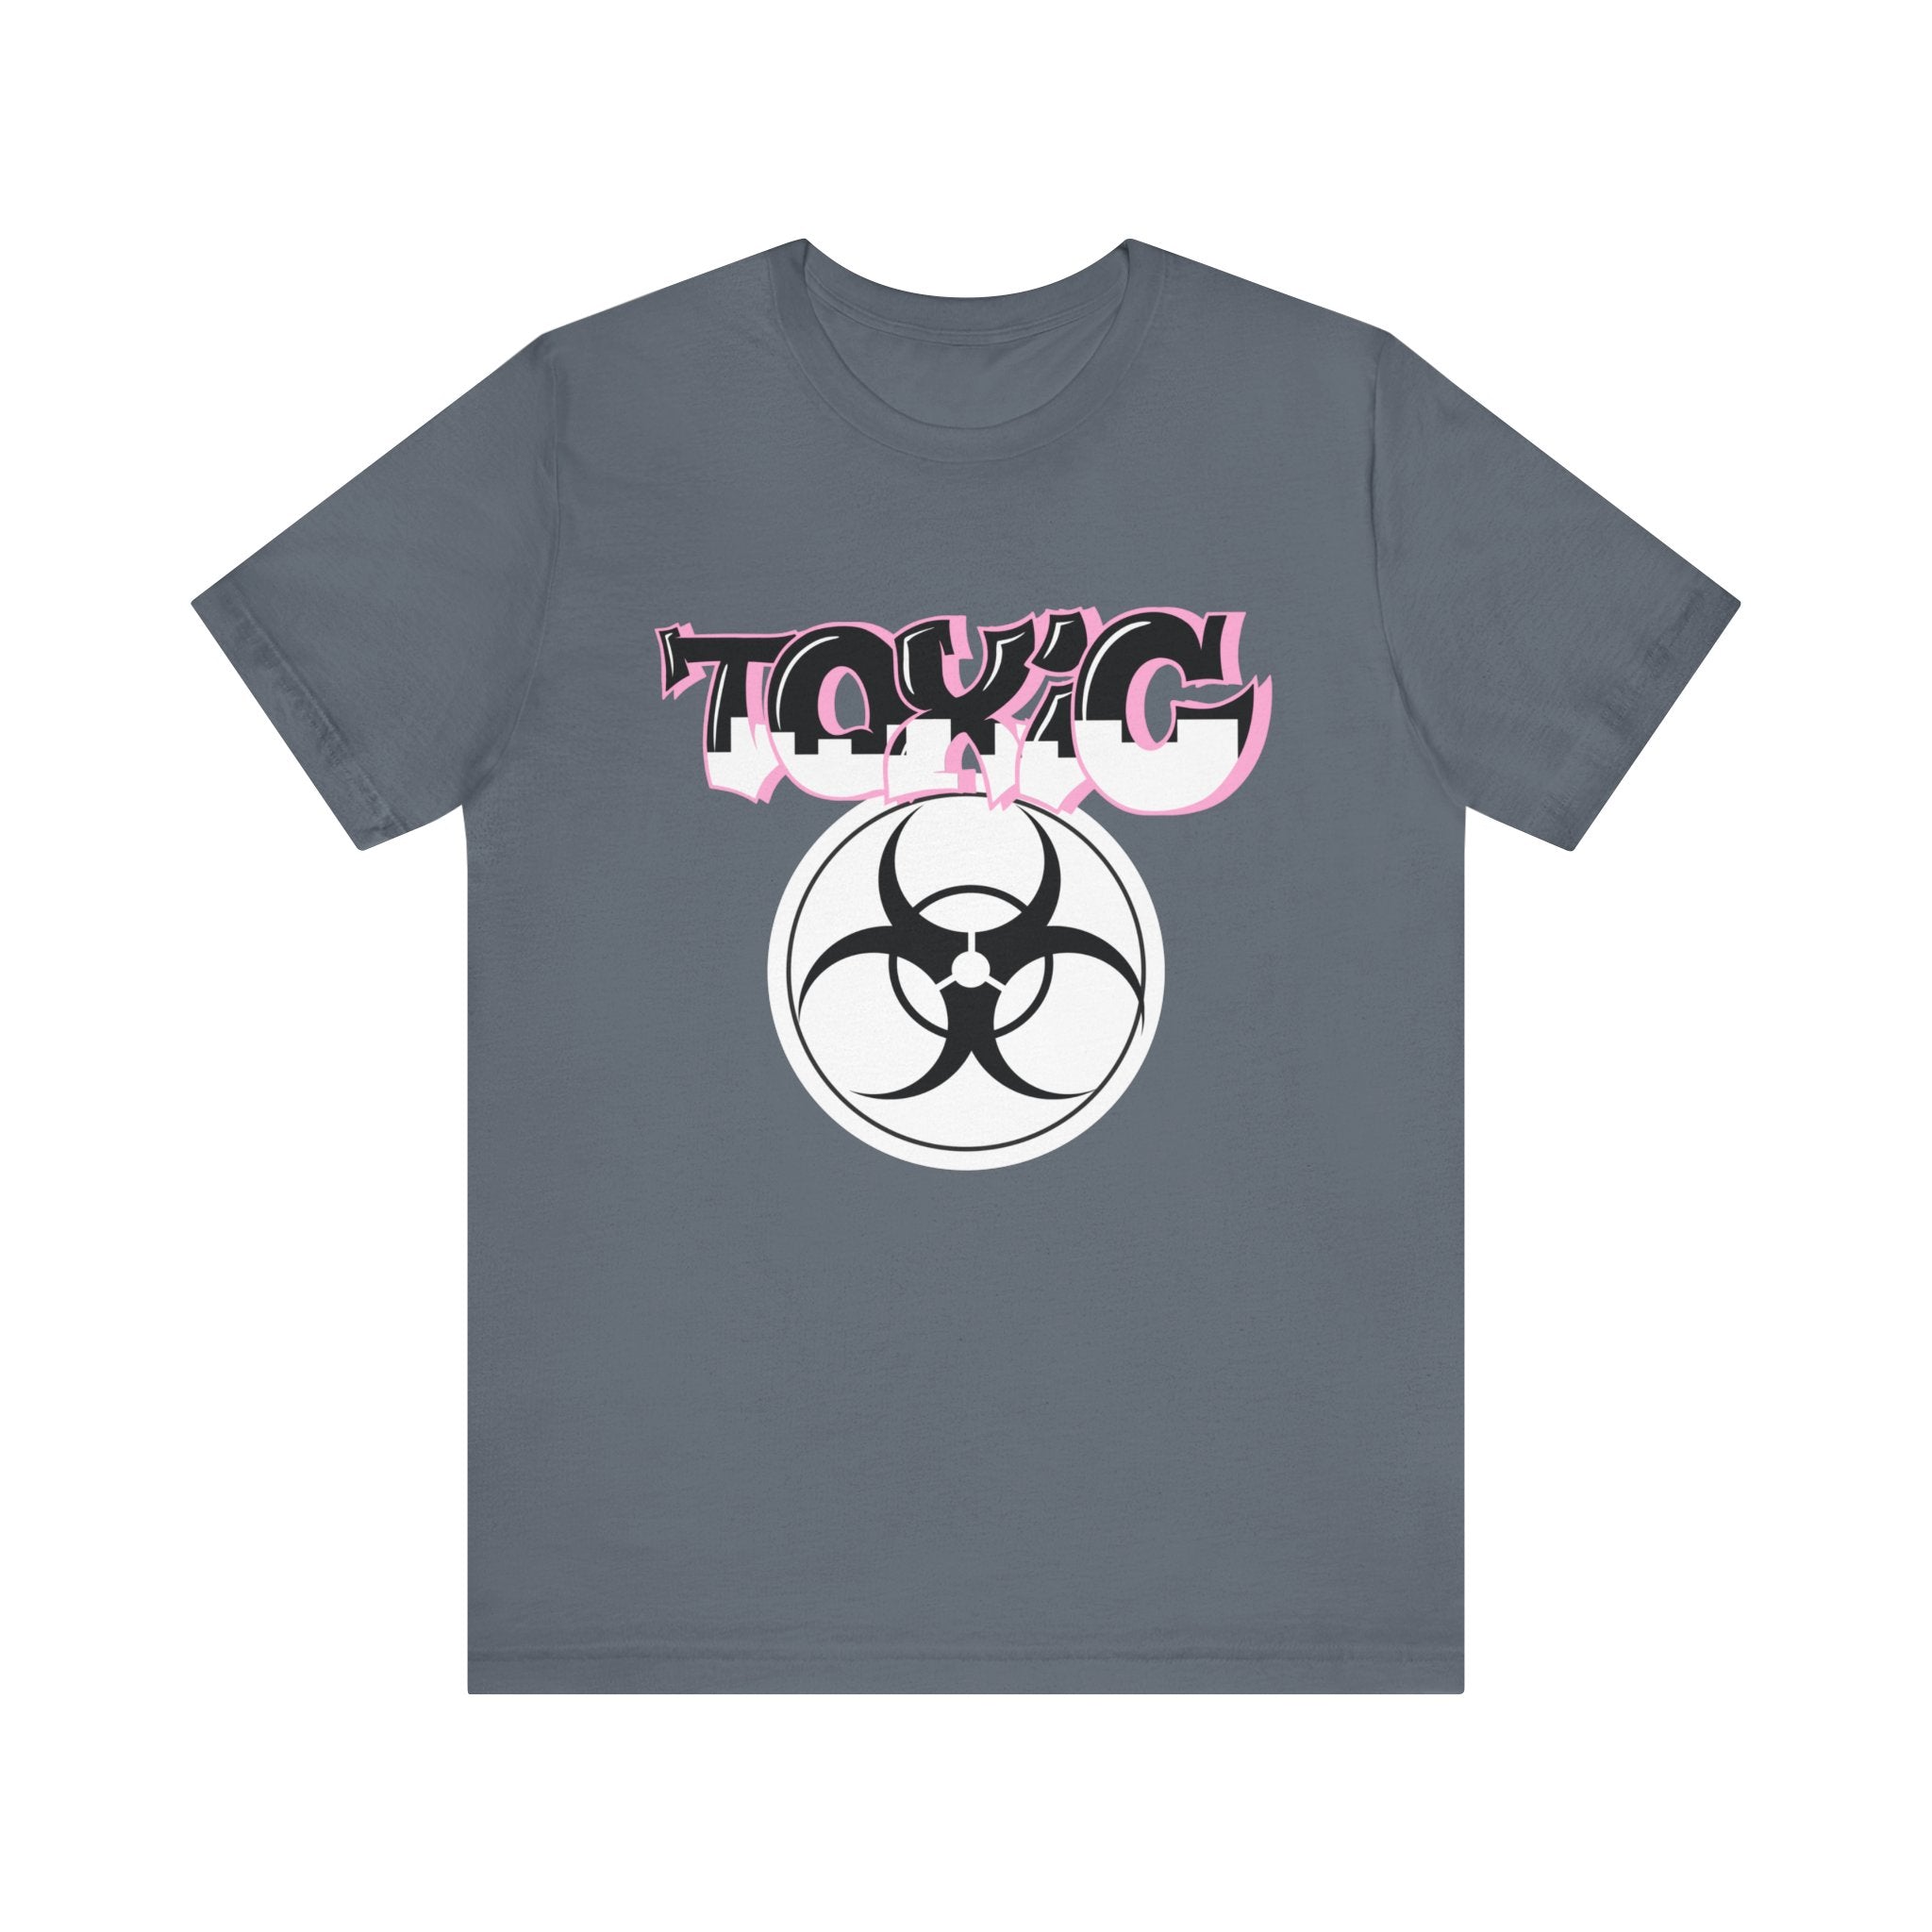 FURDreams “Toxic” Unisex Jersey Short Sleeve Tee